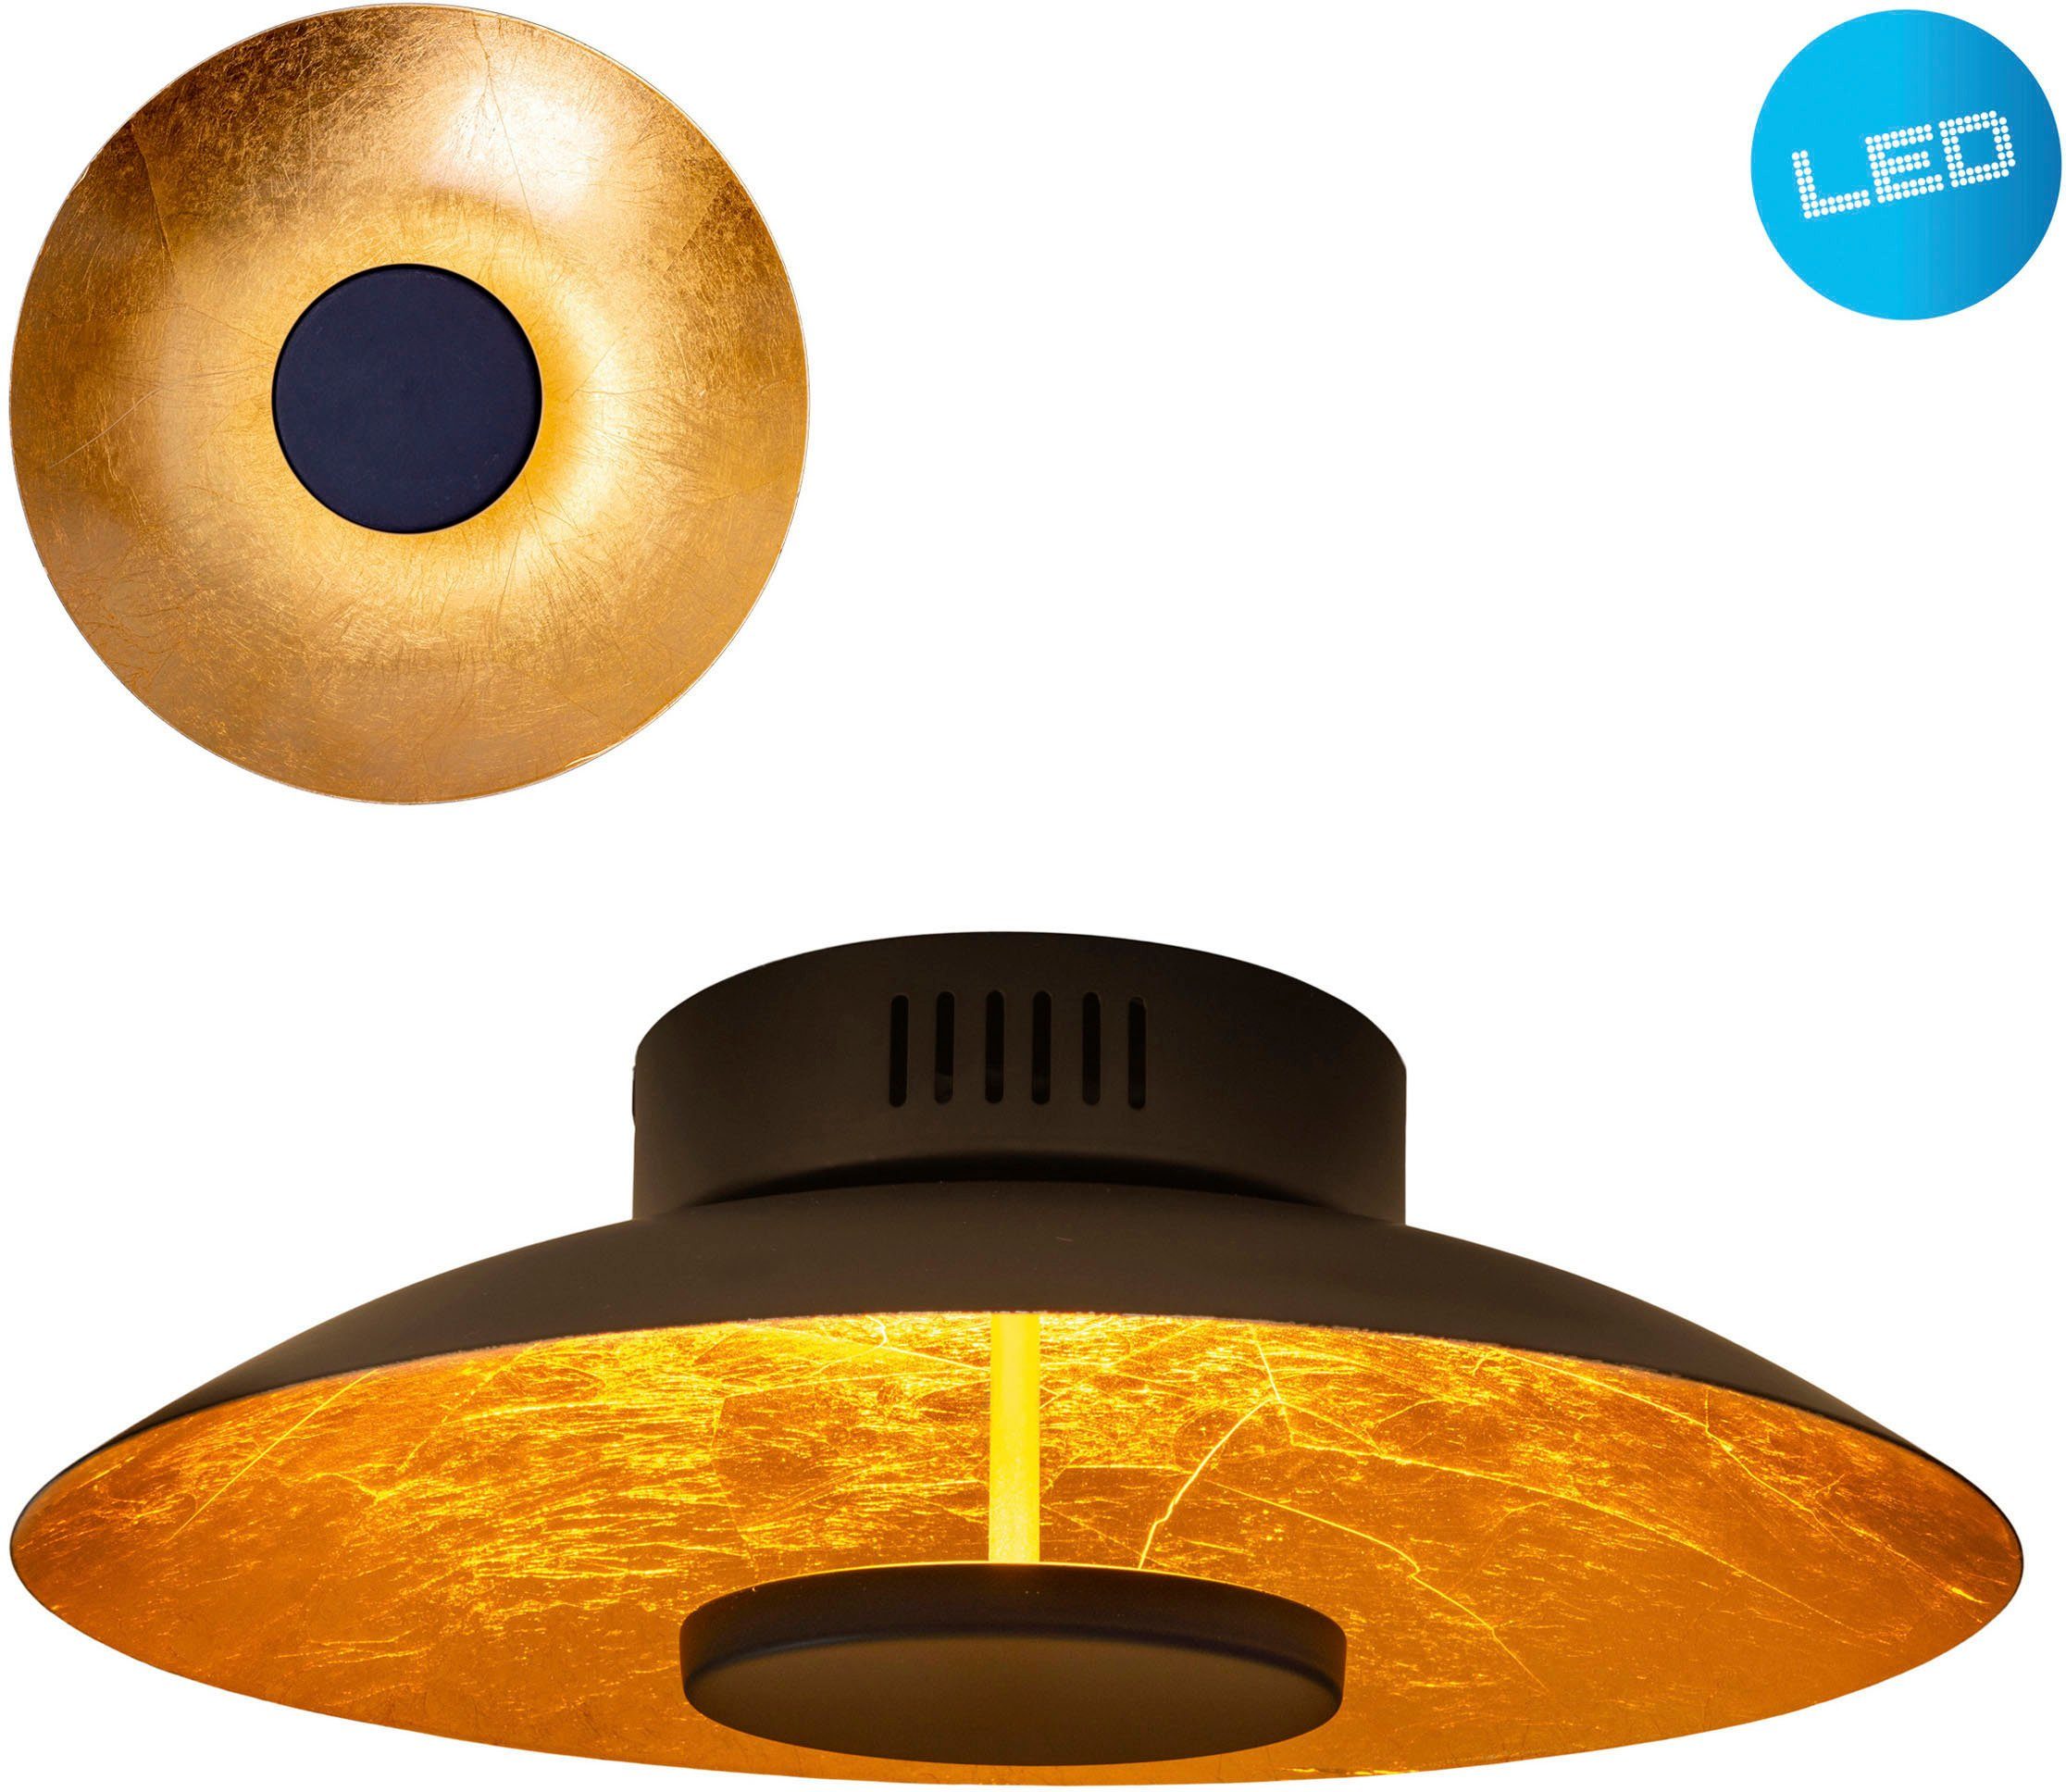 näve dimmbar, LED integriert, LED D: Firenze, 40cm LED nicht warmweiß, fest Warmweiß, schwarz/gold, 36x rund, Deckenleuchte